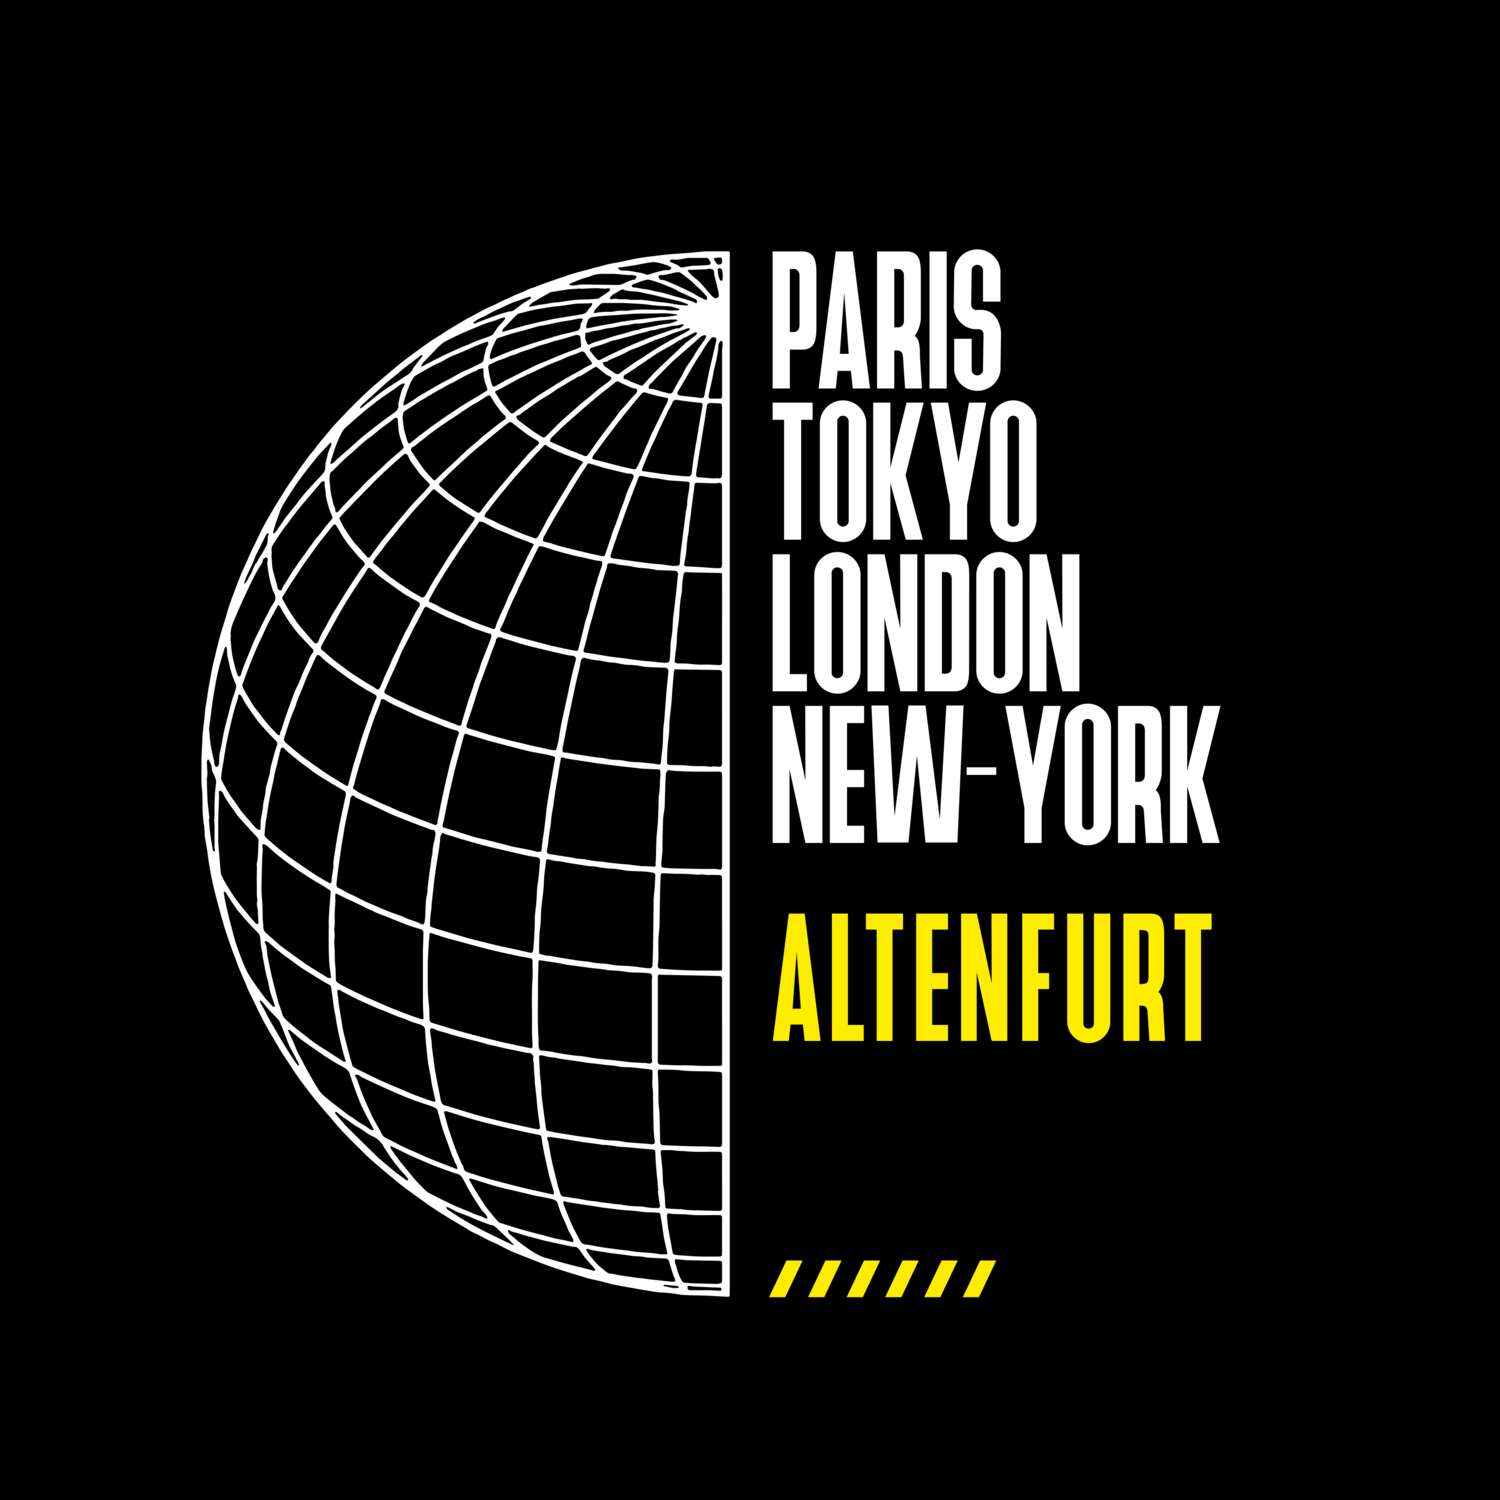 Altenfurt T-Shirt »Paris Tokyo London«